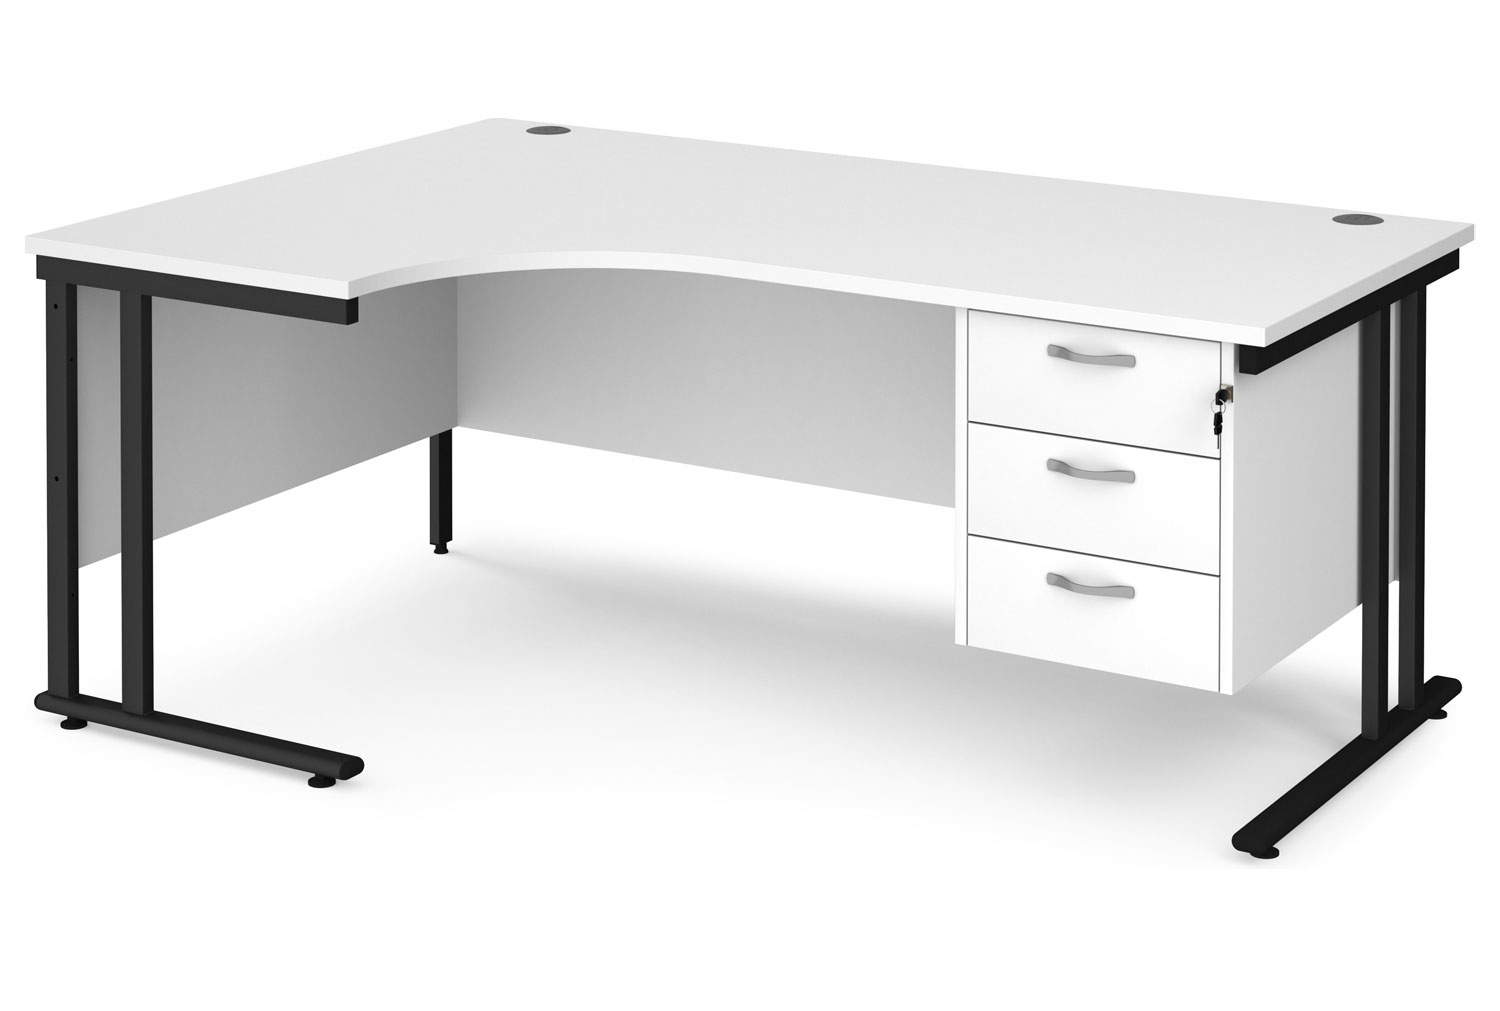 Value Line Deluxe C-Leg Left Hand Ergonomic Office Desk 3 Drawers (Black Legs), 180wx120/80dx73h (cm), White, Express Delivery